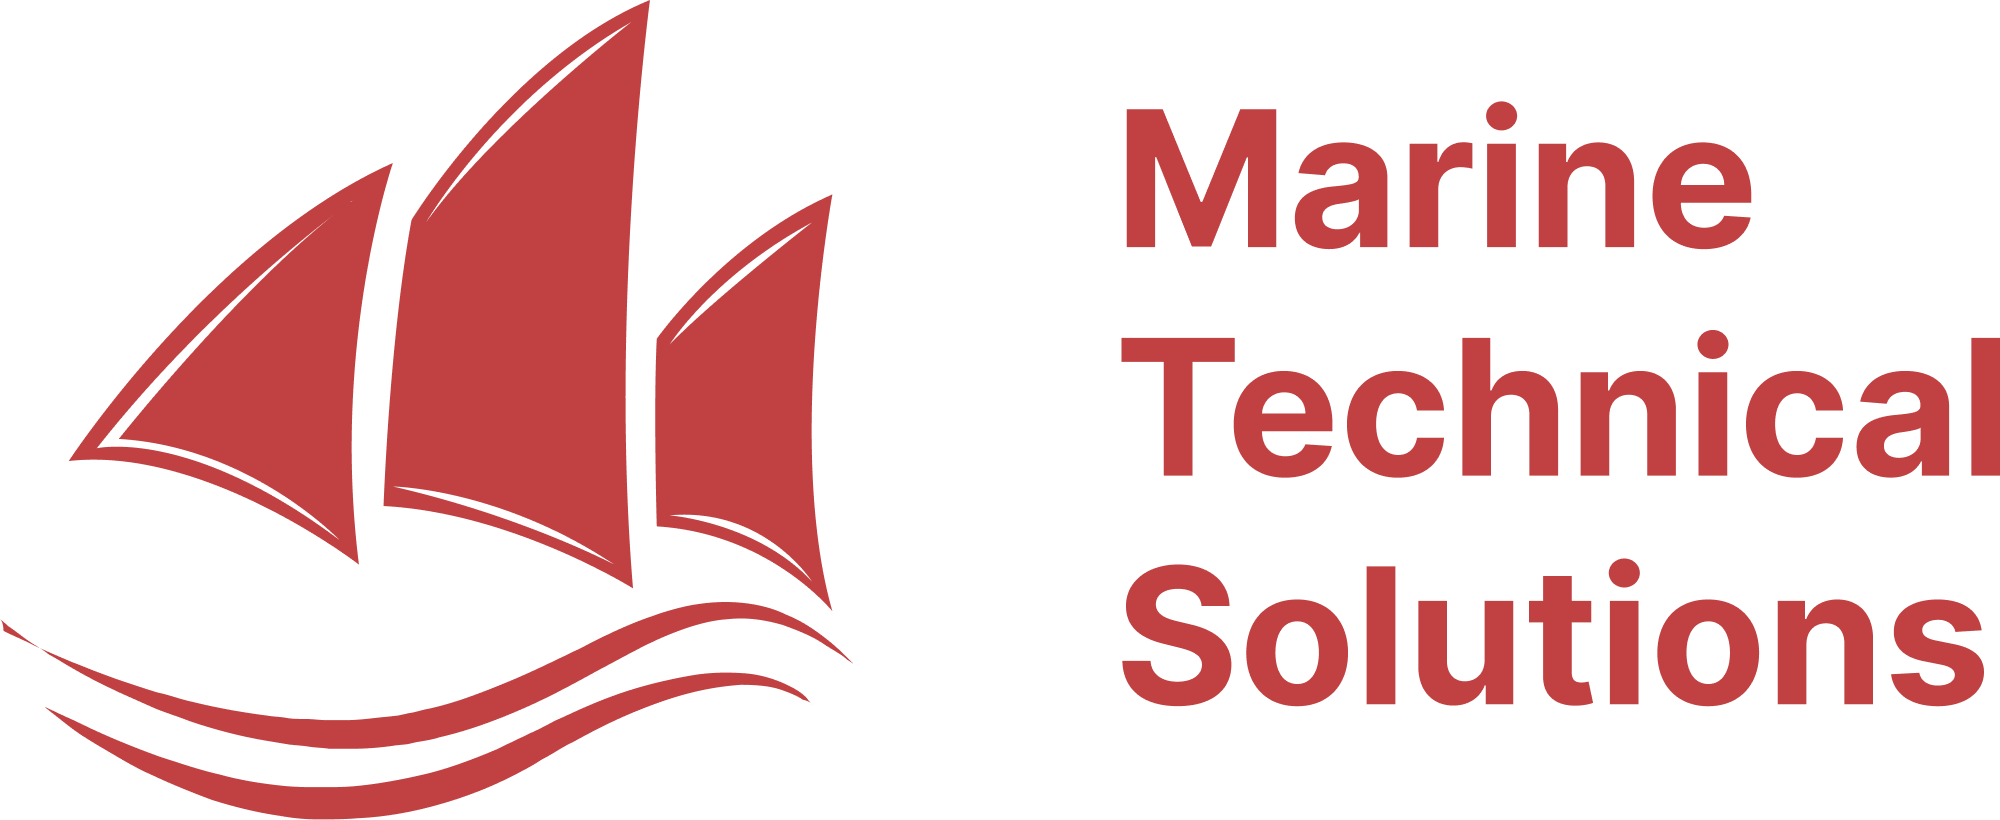 B.S Marine Technical Solutions